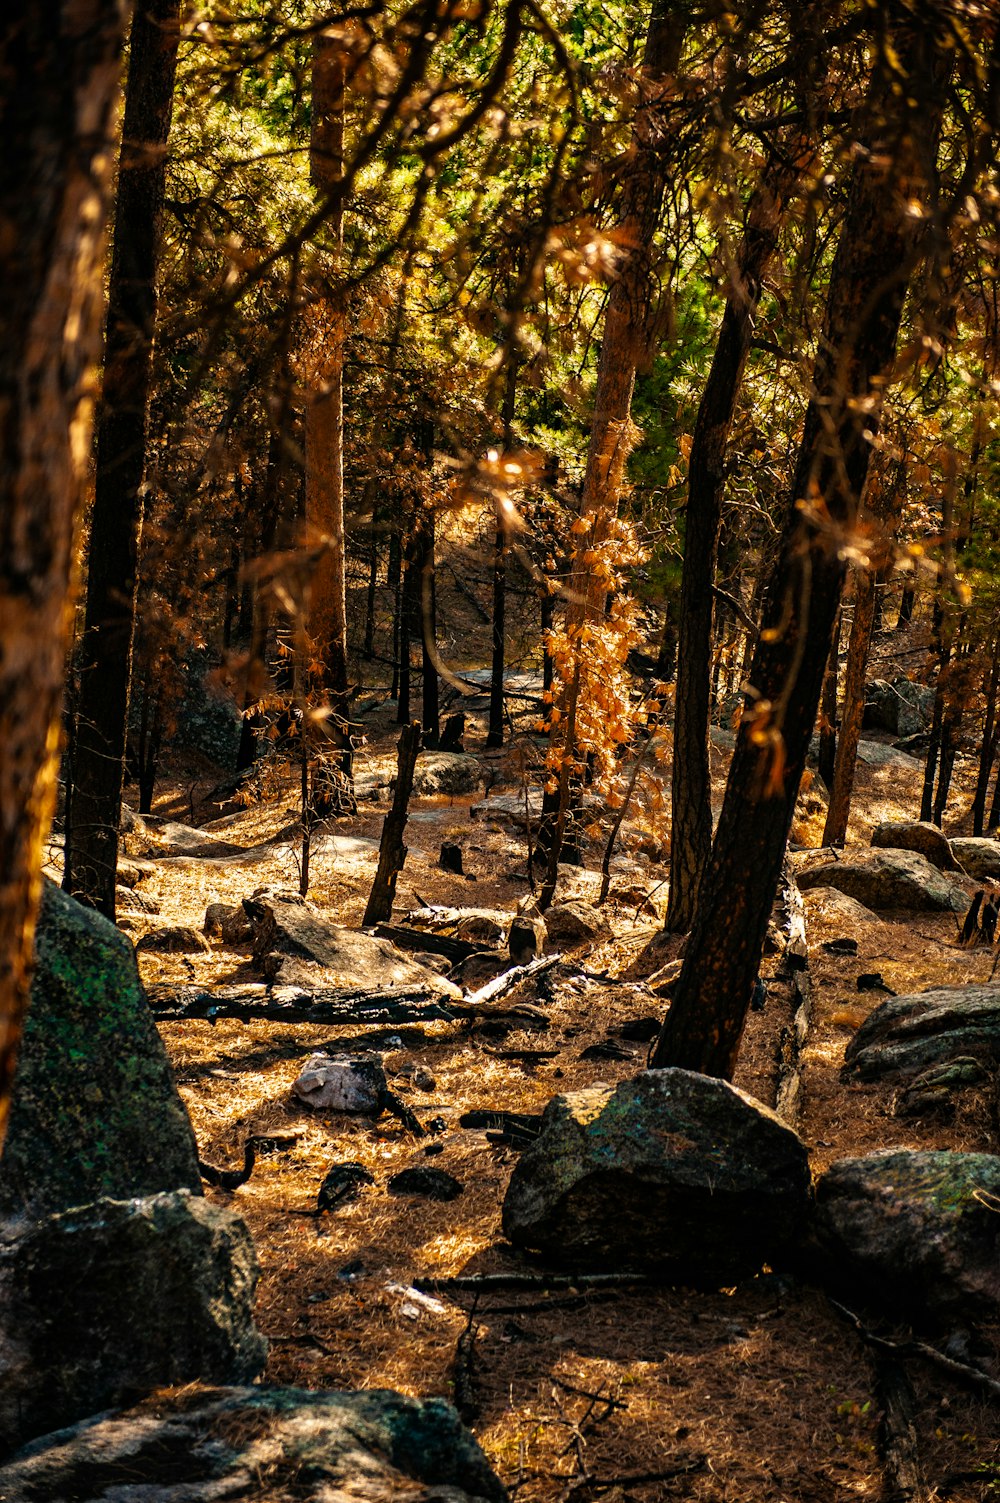 a rocky path through a forest